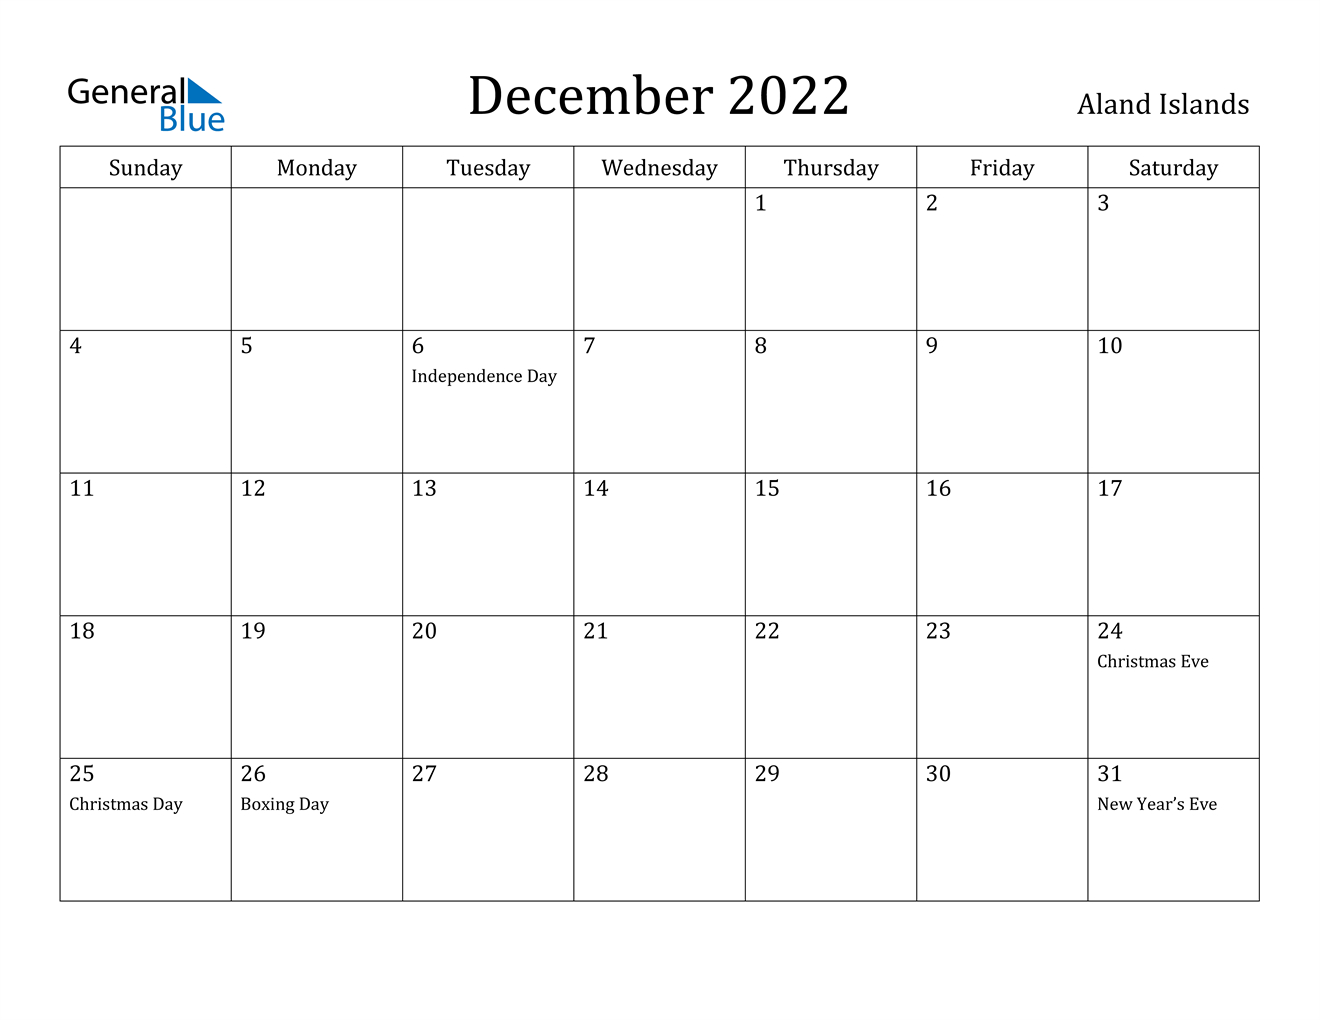 December 2022 Calendar - Aland Islands Calendar For December 2022